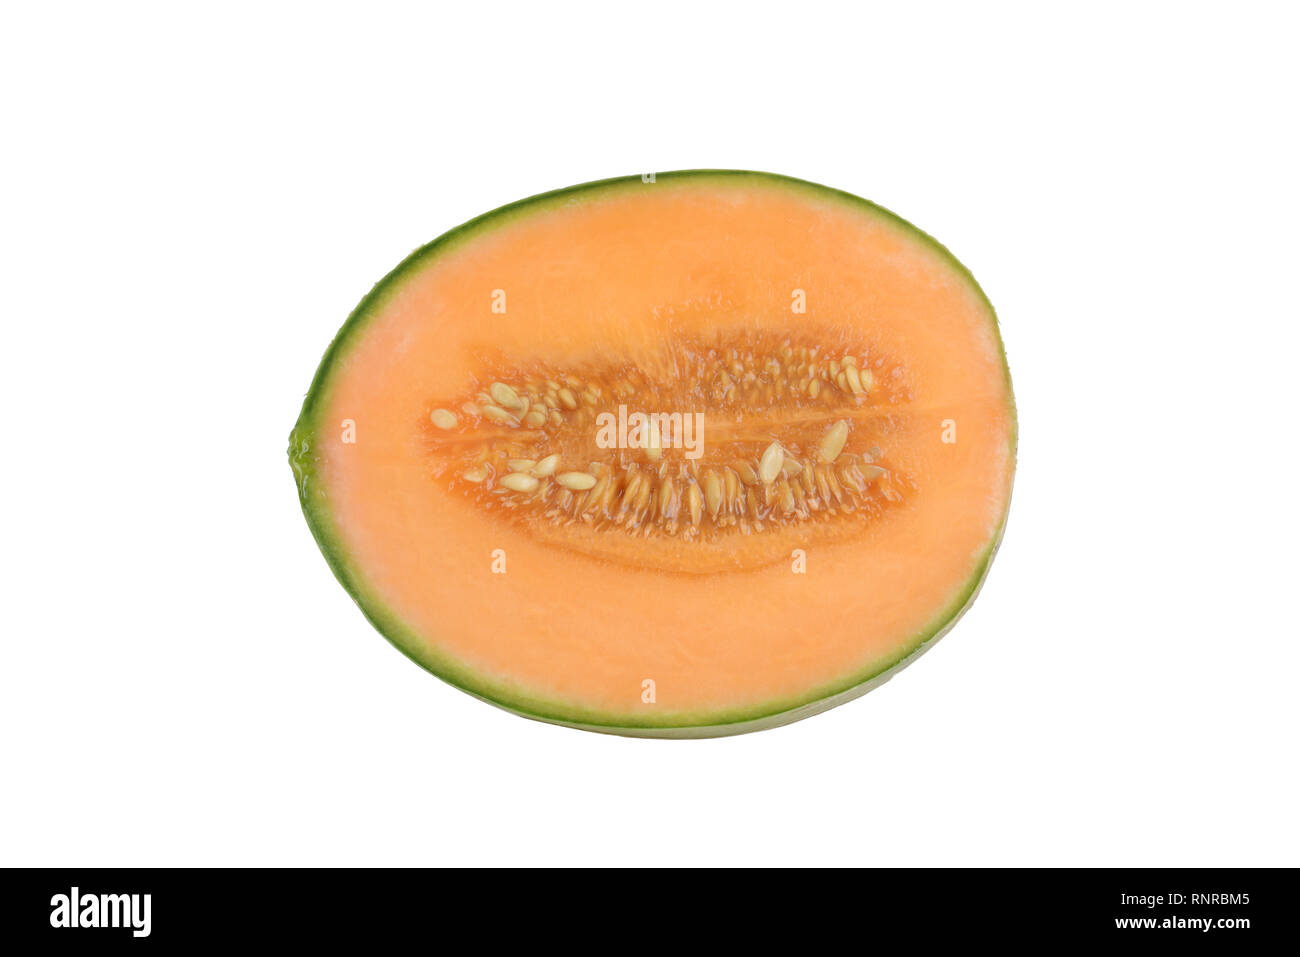 Isolated cut hybrid cantaloupe honeydew melon Stock Photo